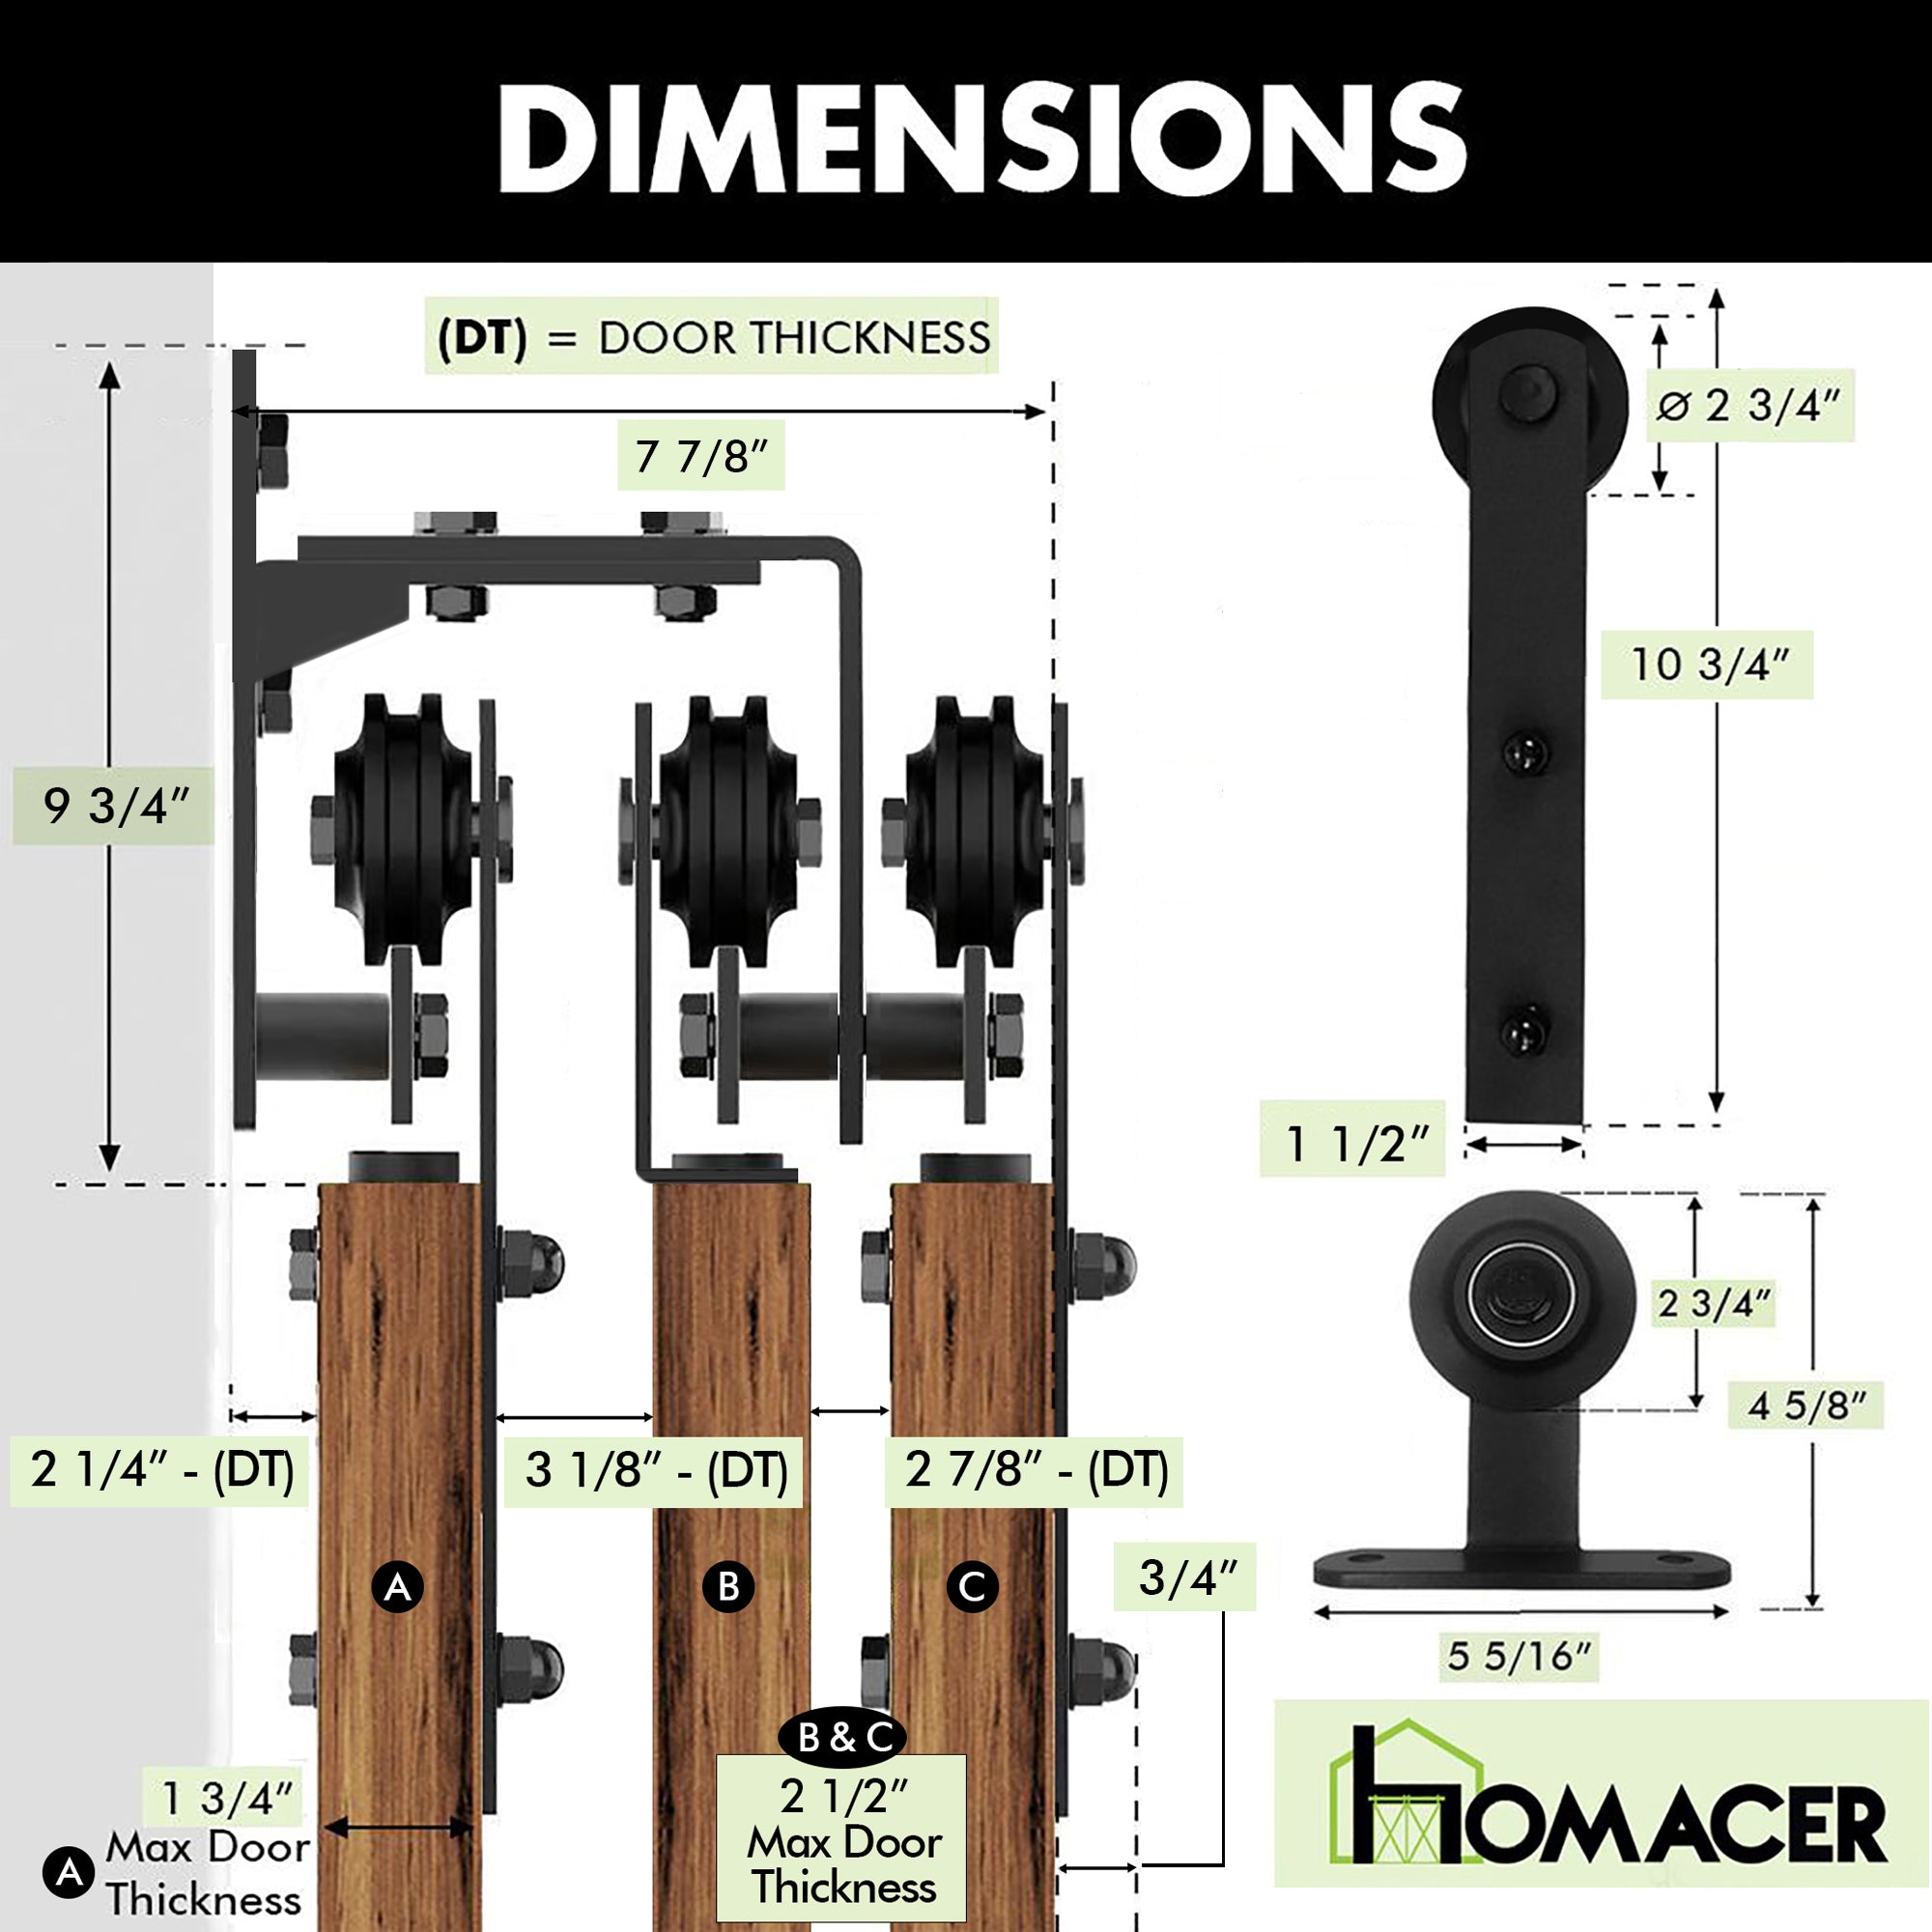 homacer triple bypass door hardware kit dimensions guide